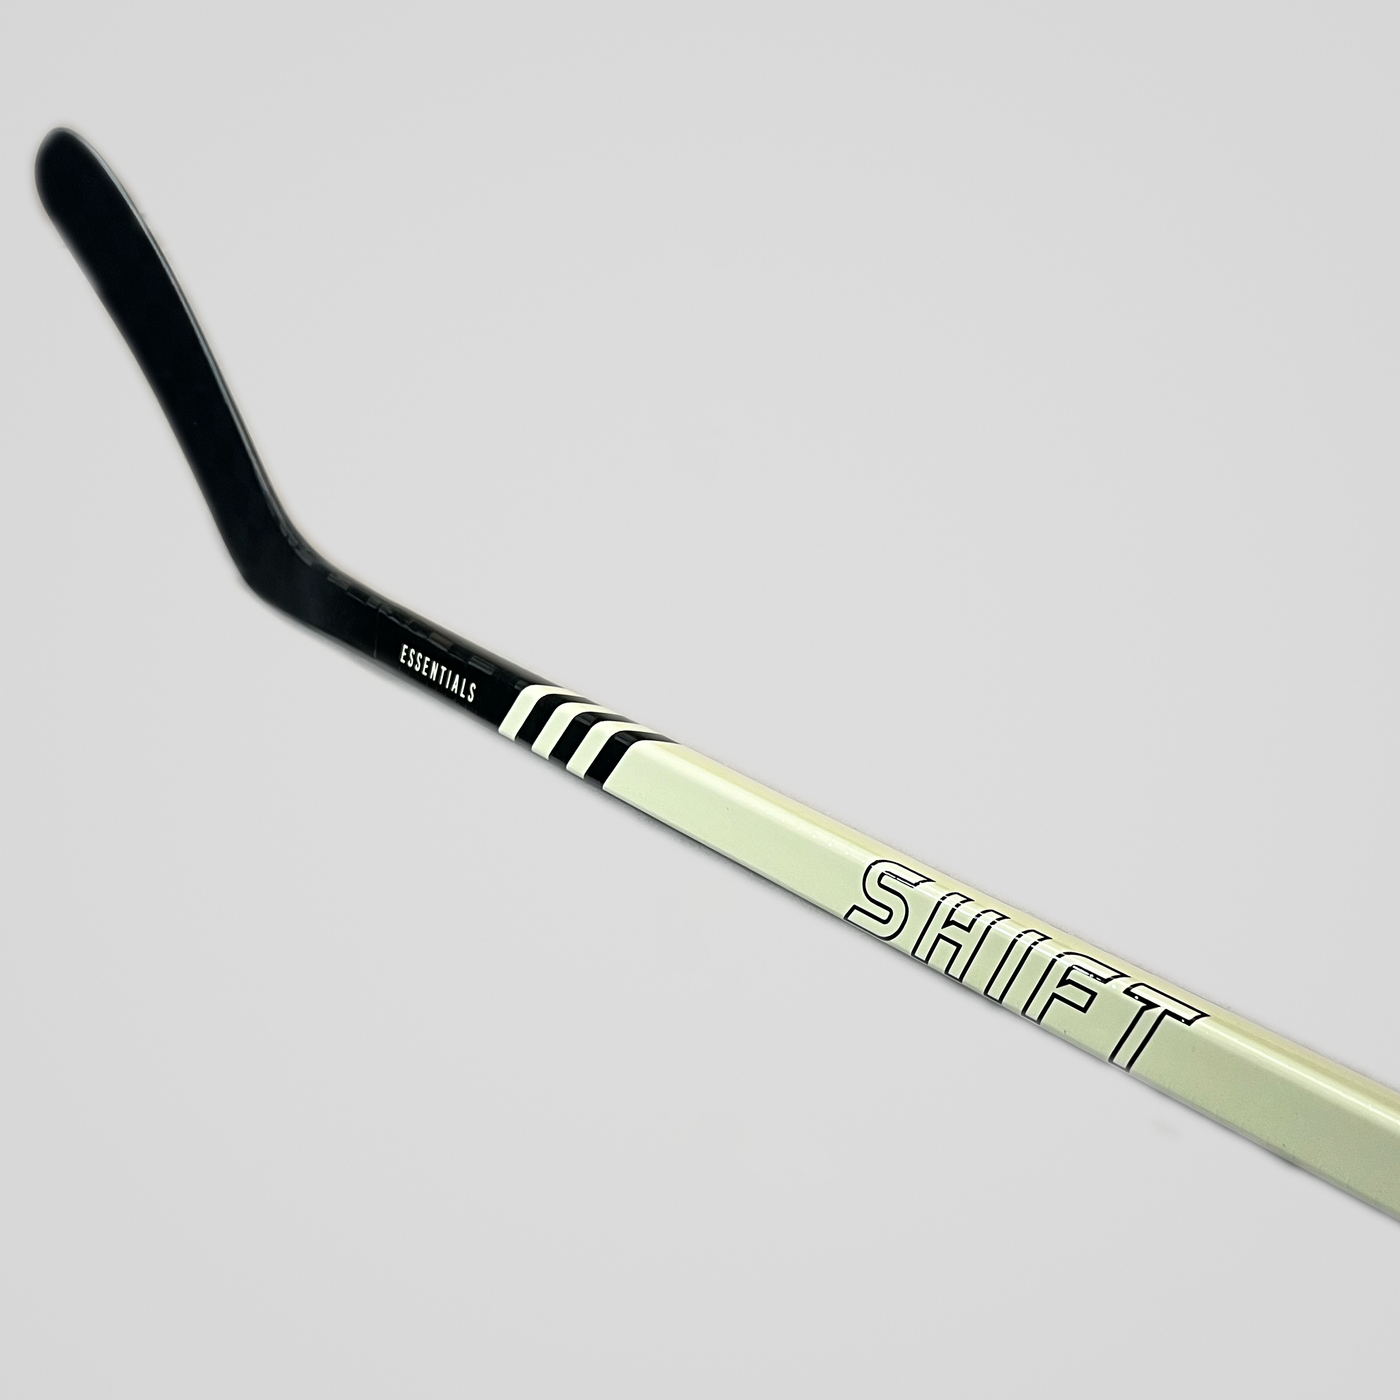 Essentials - Junior Hockey Stick - 58"